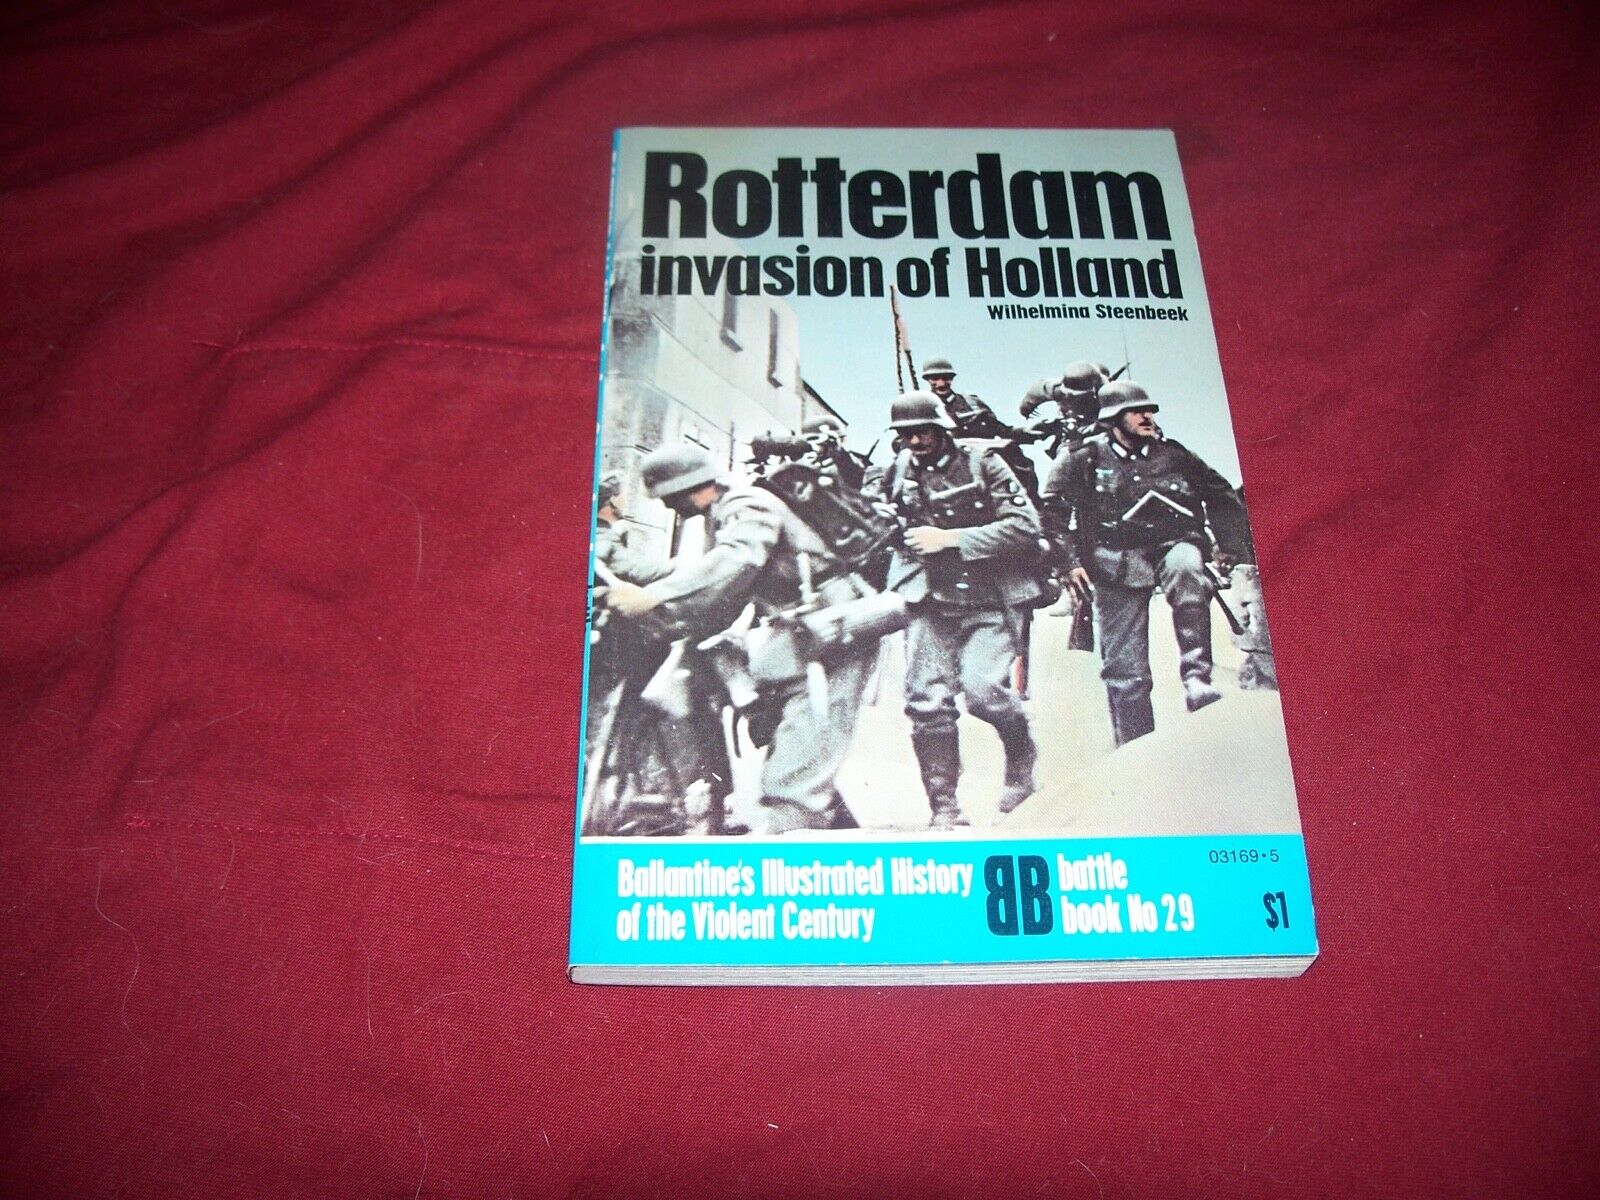 BALLANTINE'S ILLUSTRATED HISTORY, BATTLE BOOK #29, ROTTERDAM INVASION OF HOLLAND